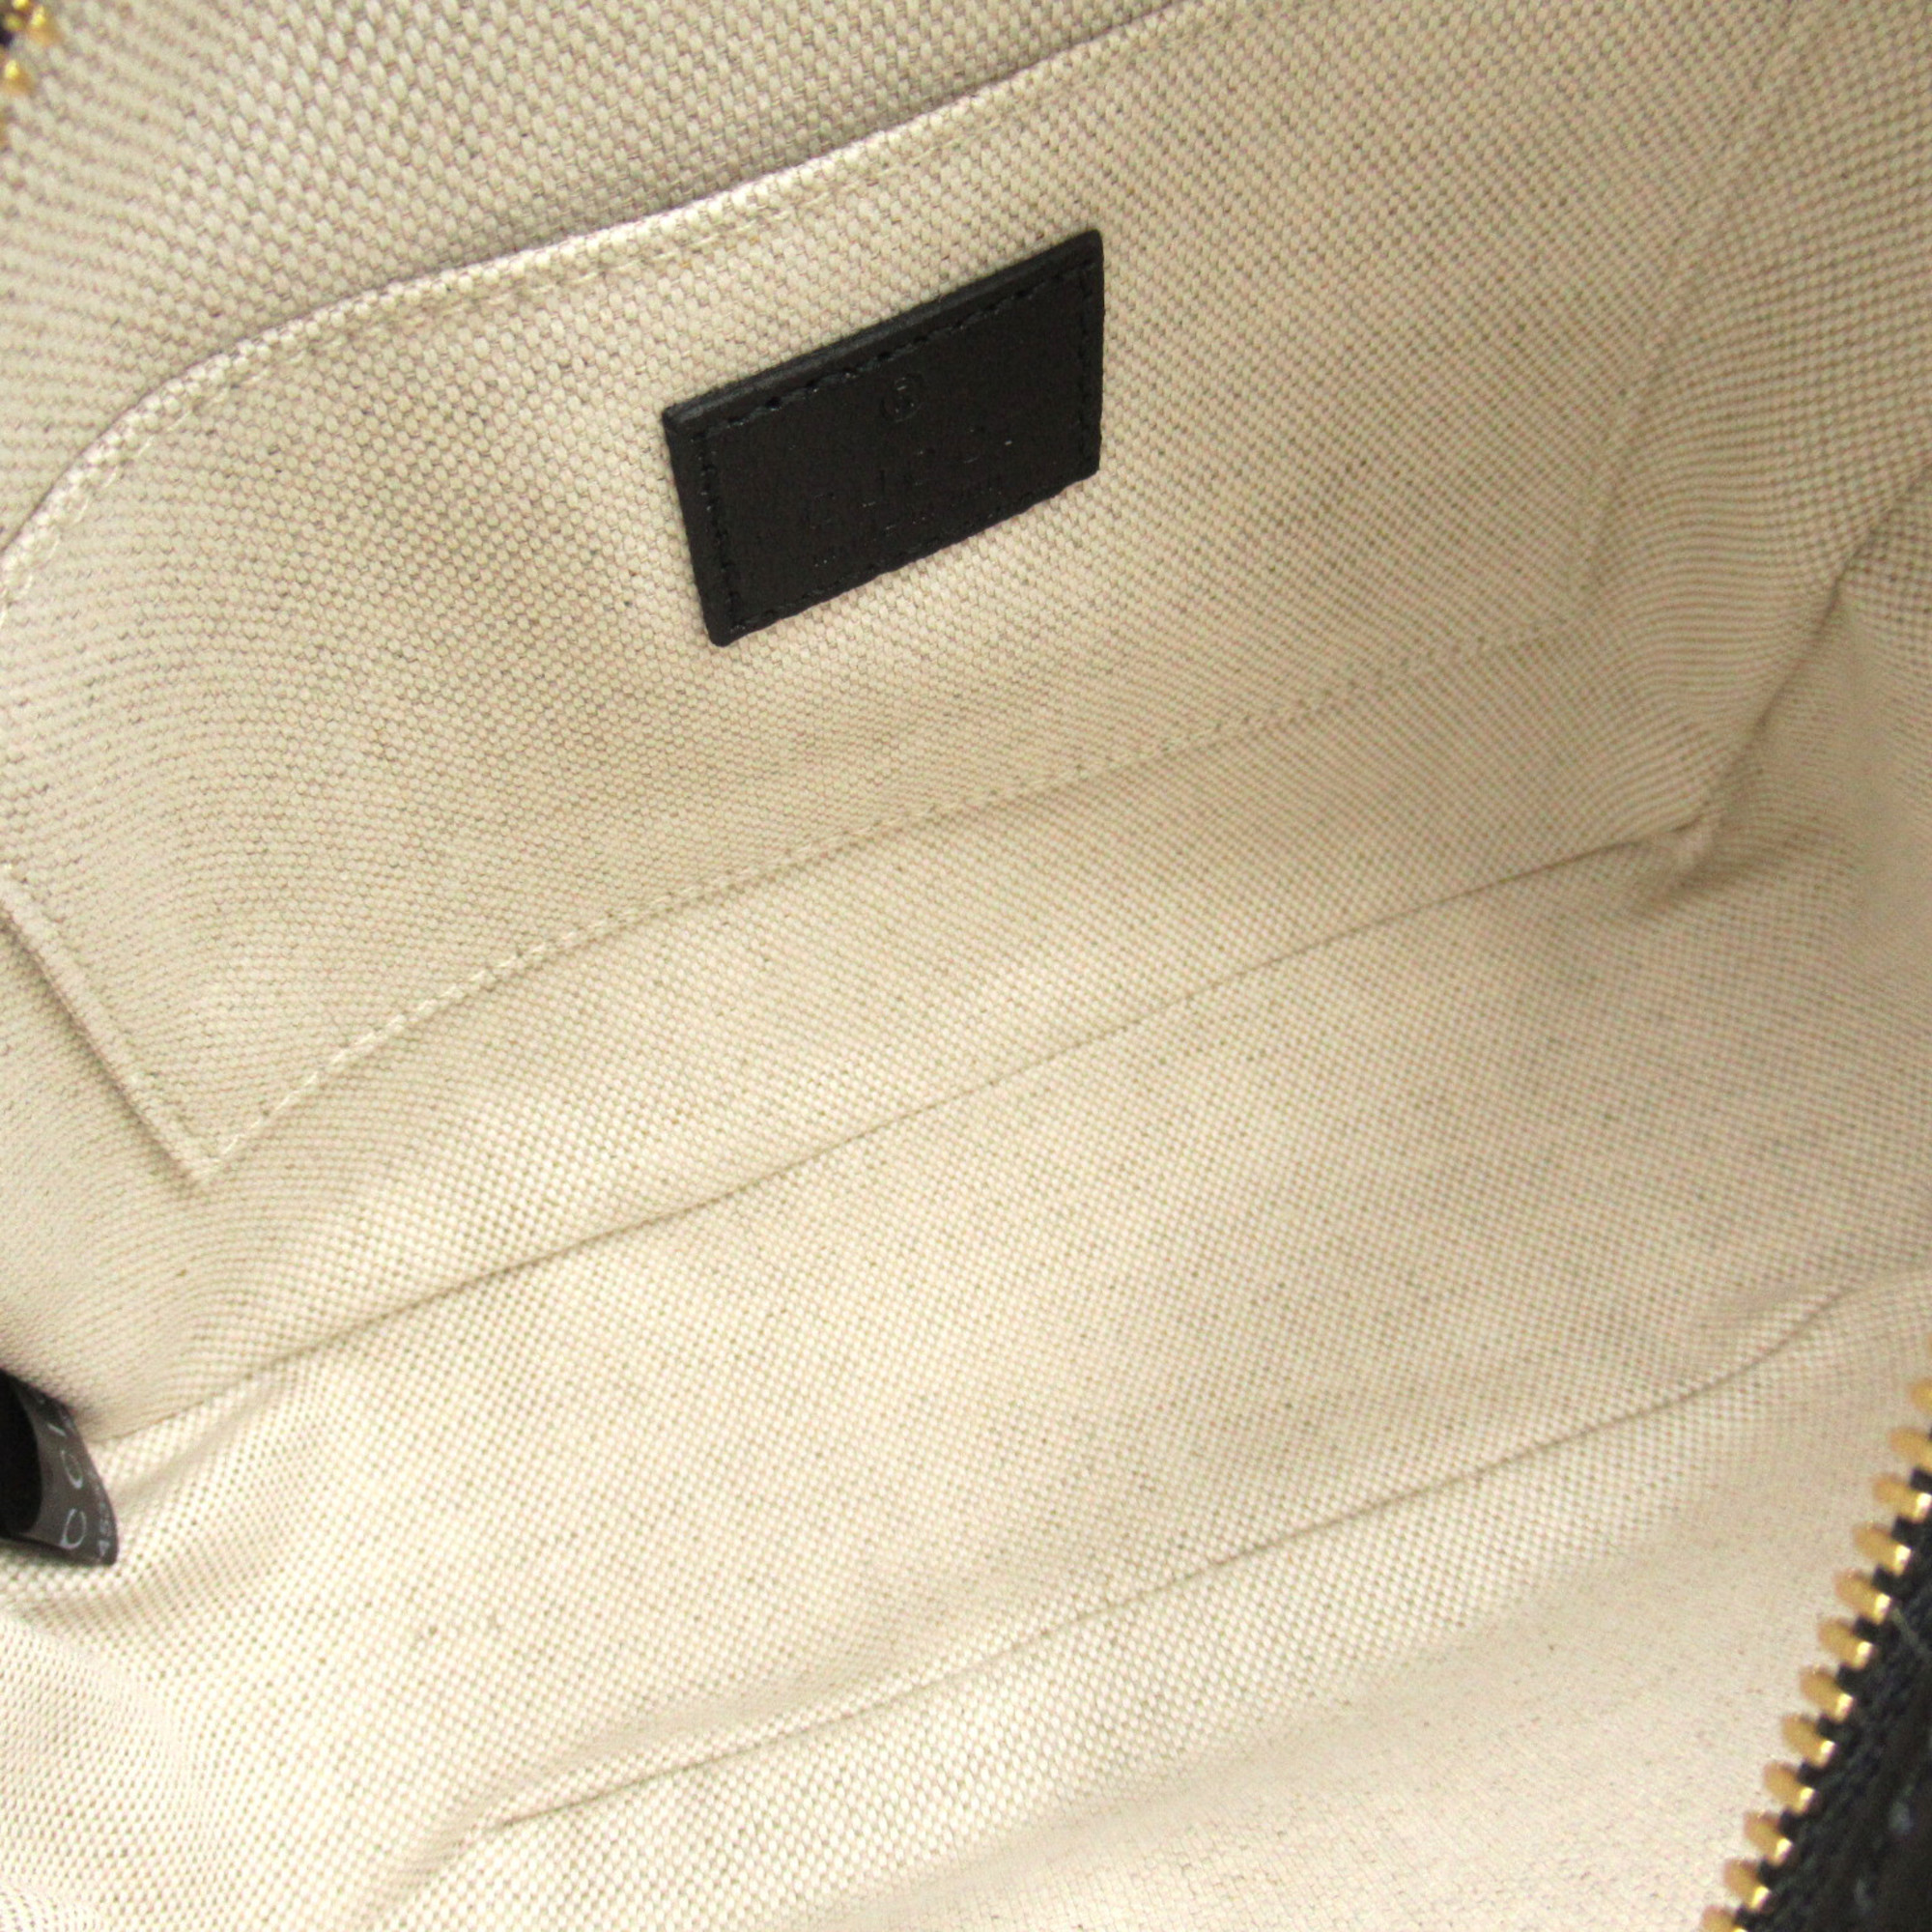 GUCCI Blondie Small Shoulder Bag Black leather 7423601IV0G1000